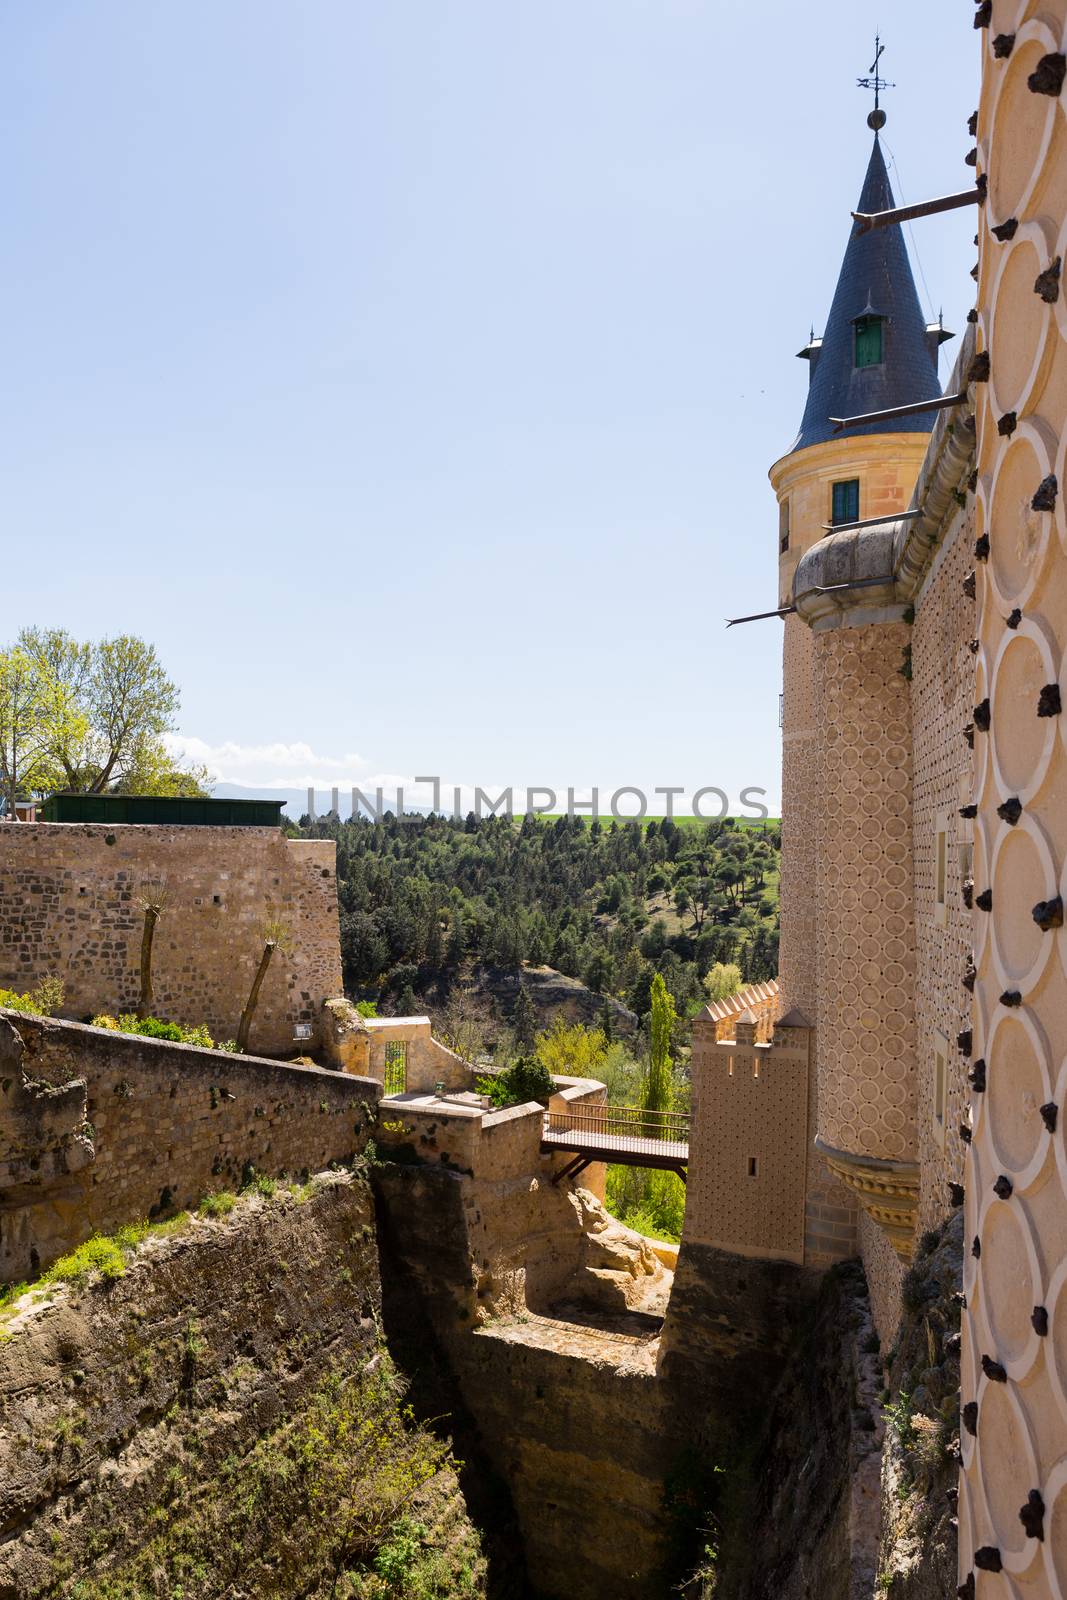 Details of the famous Alcazar castle of Segovia, Castilla y Leon, Spain